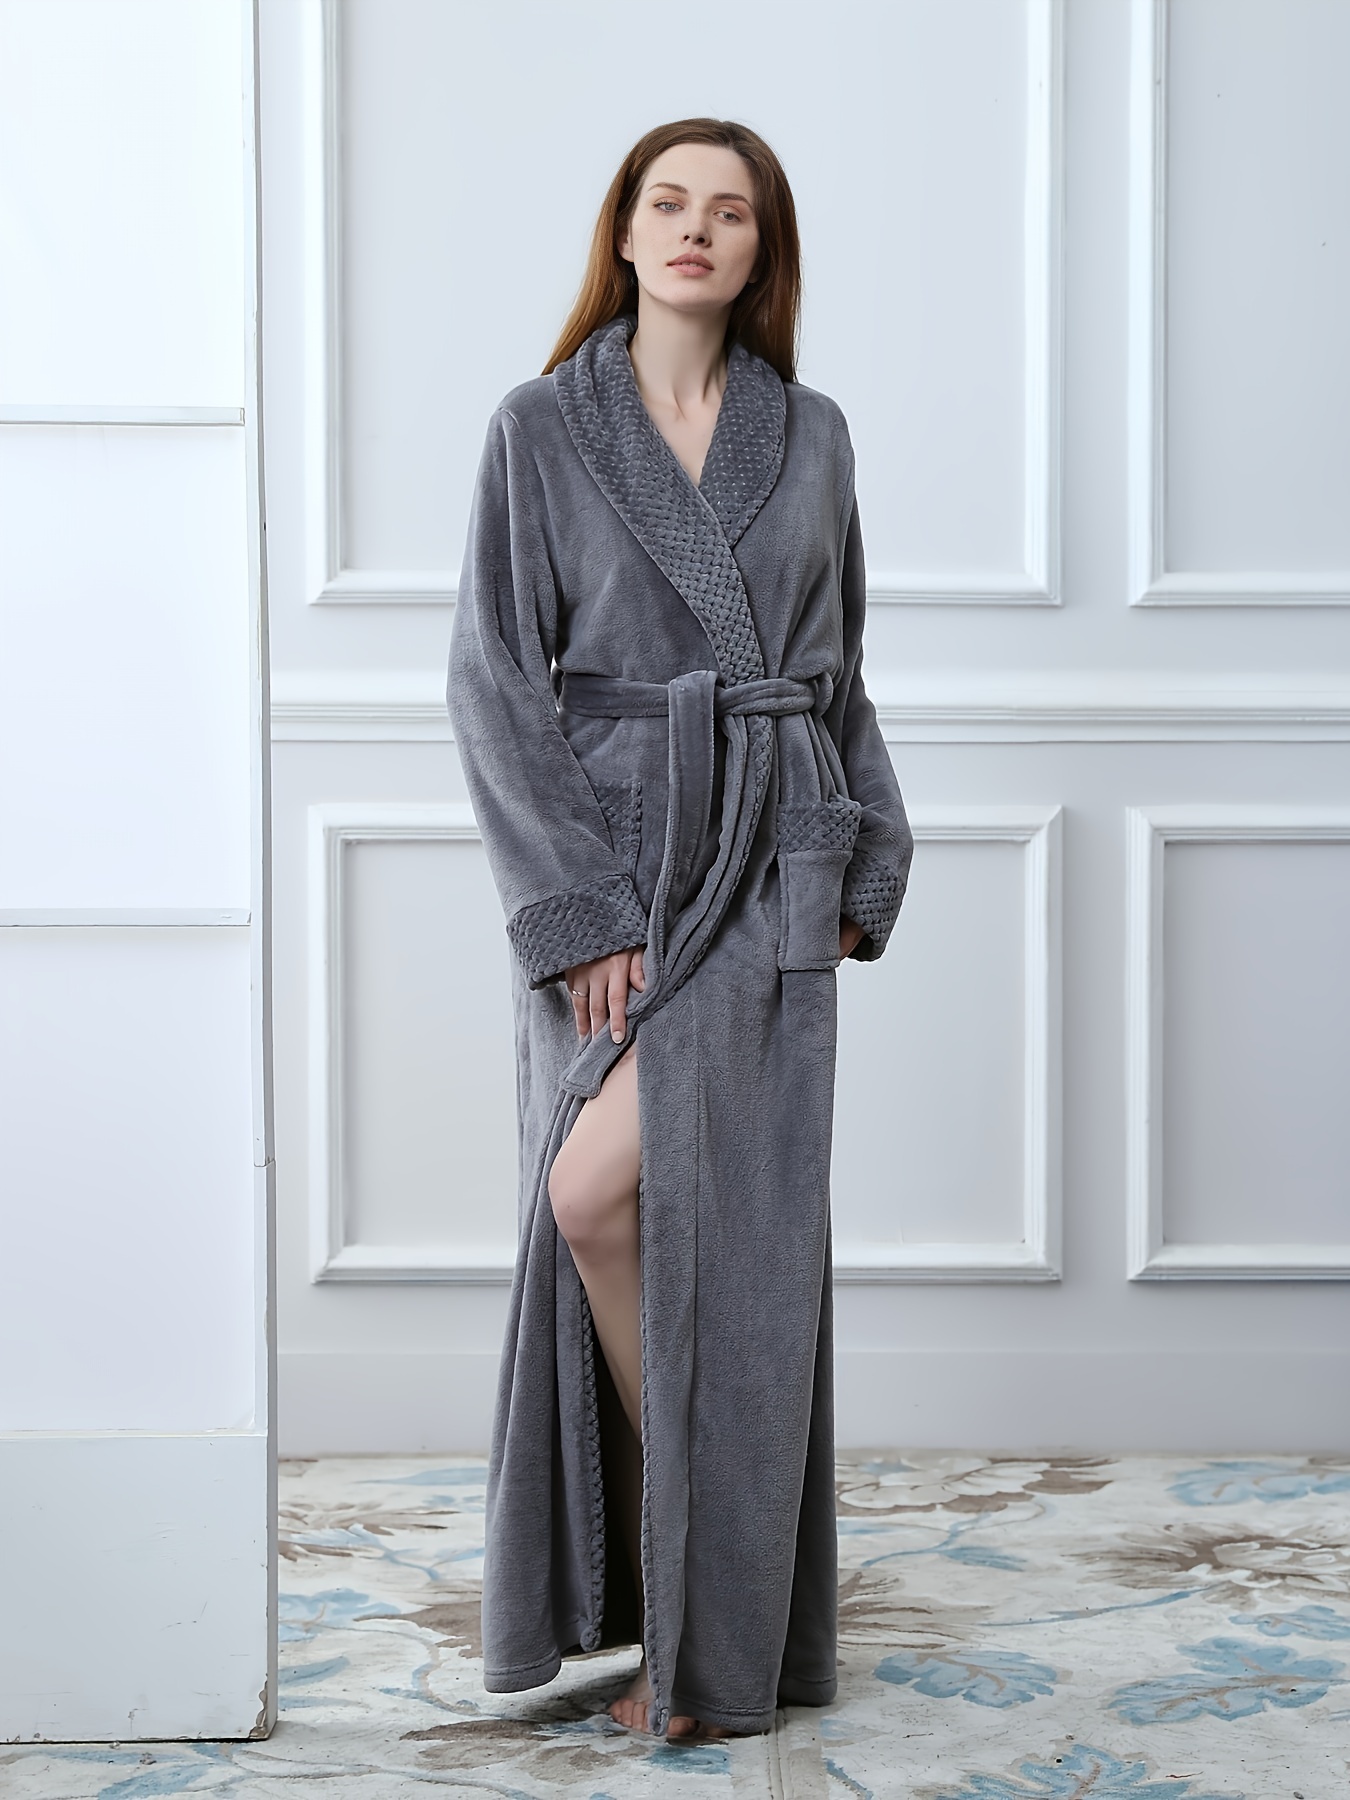 Women's Grey Robes & Sleepwear